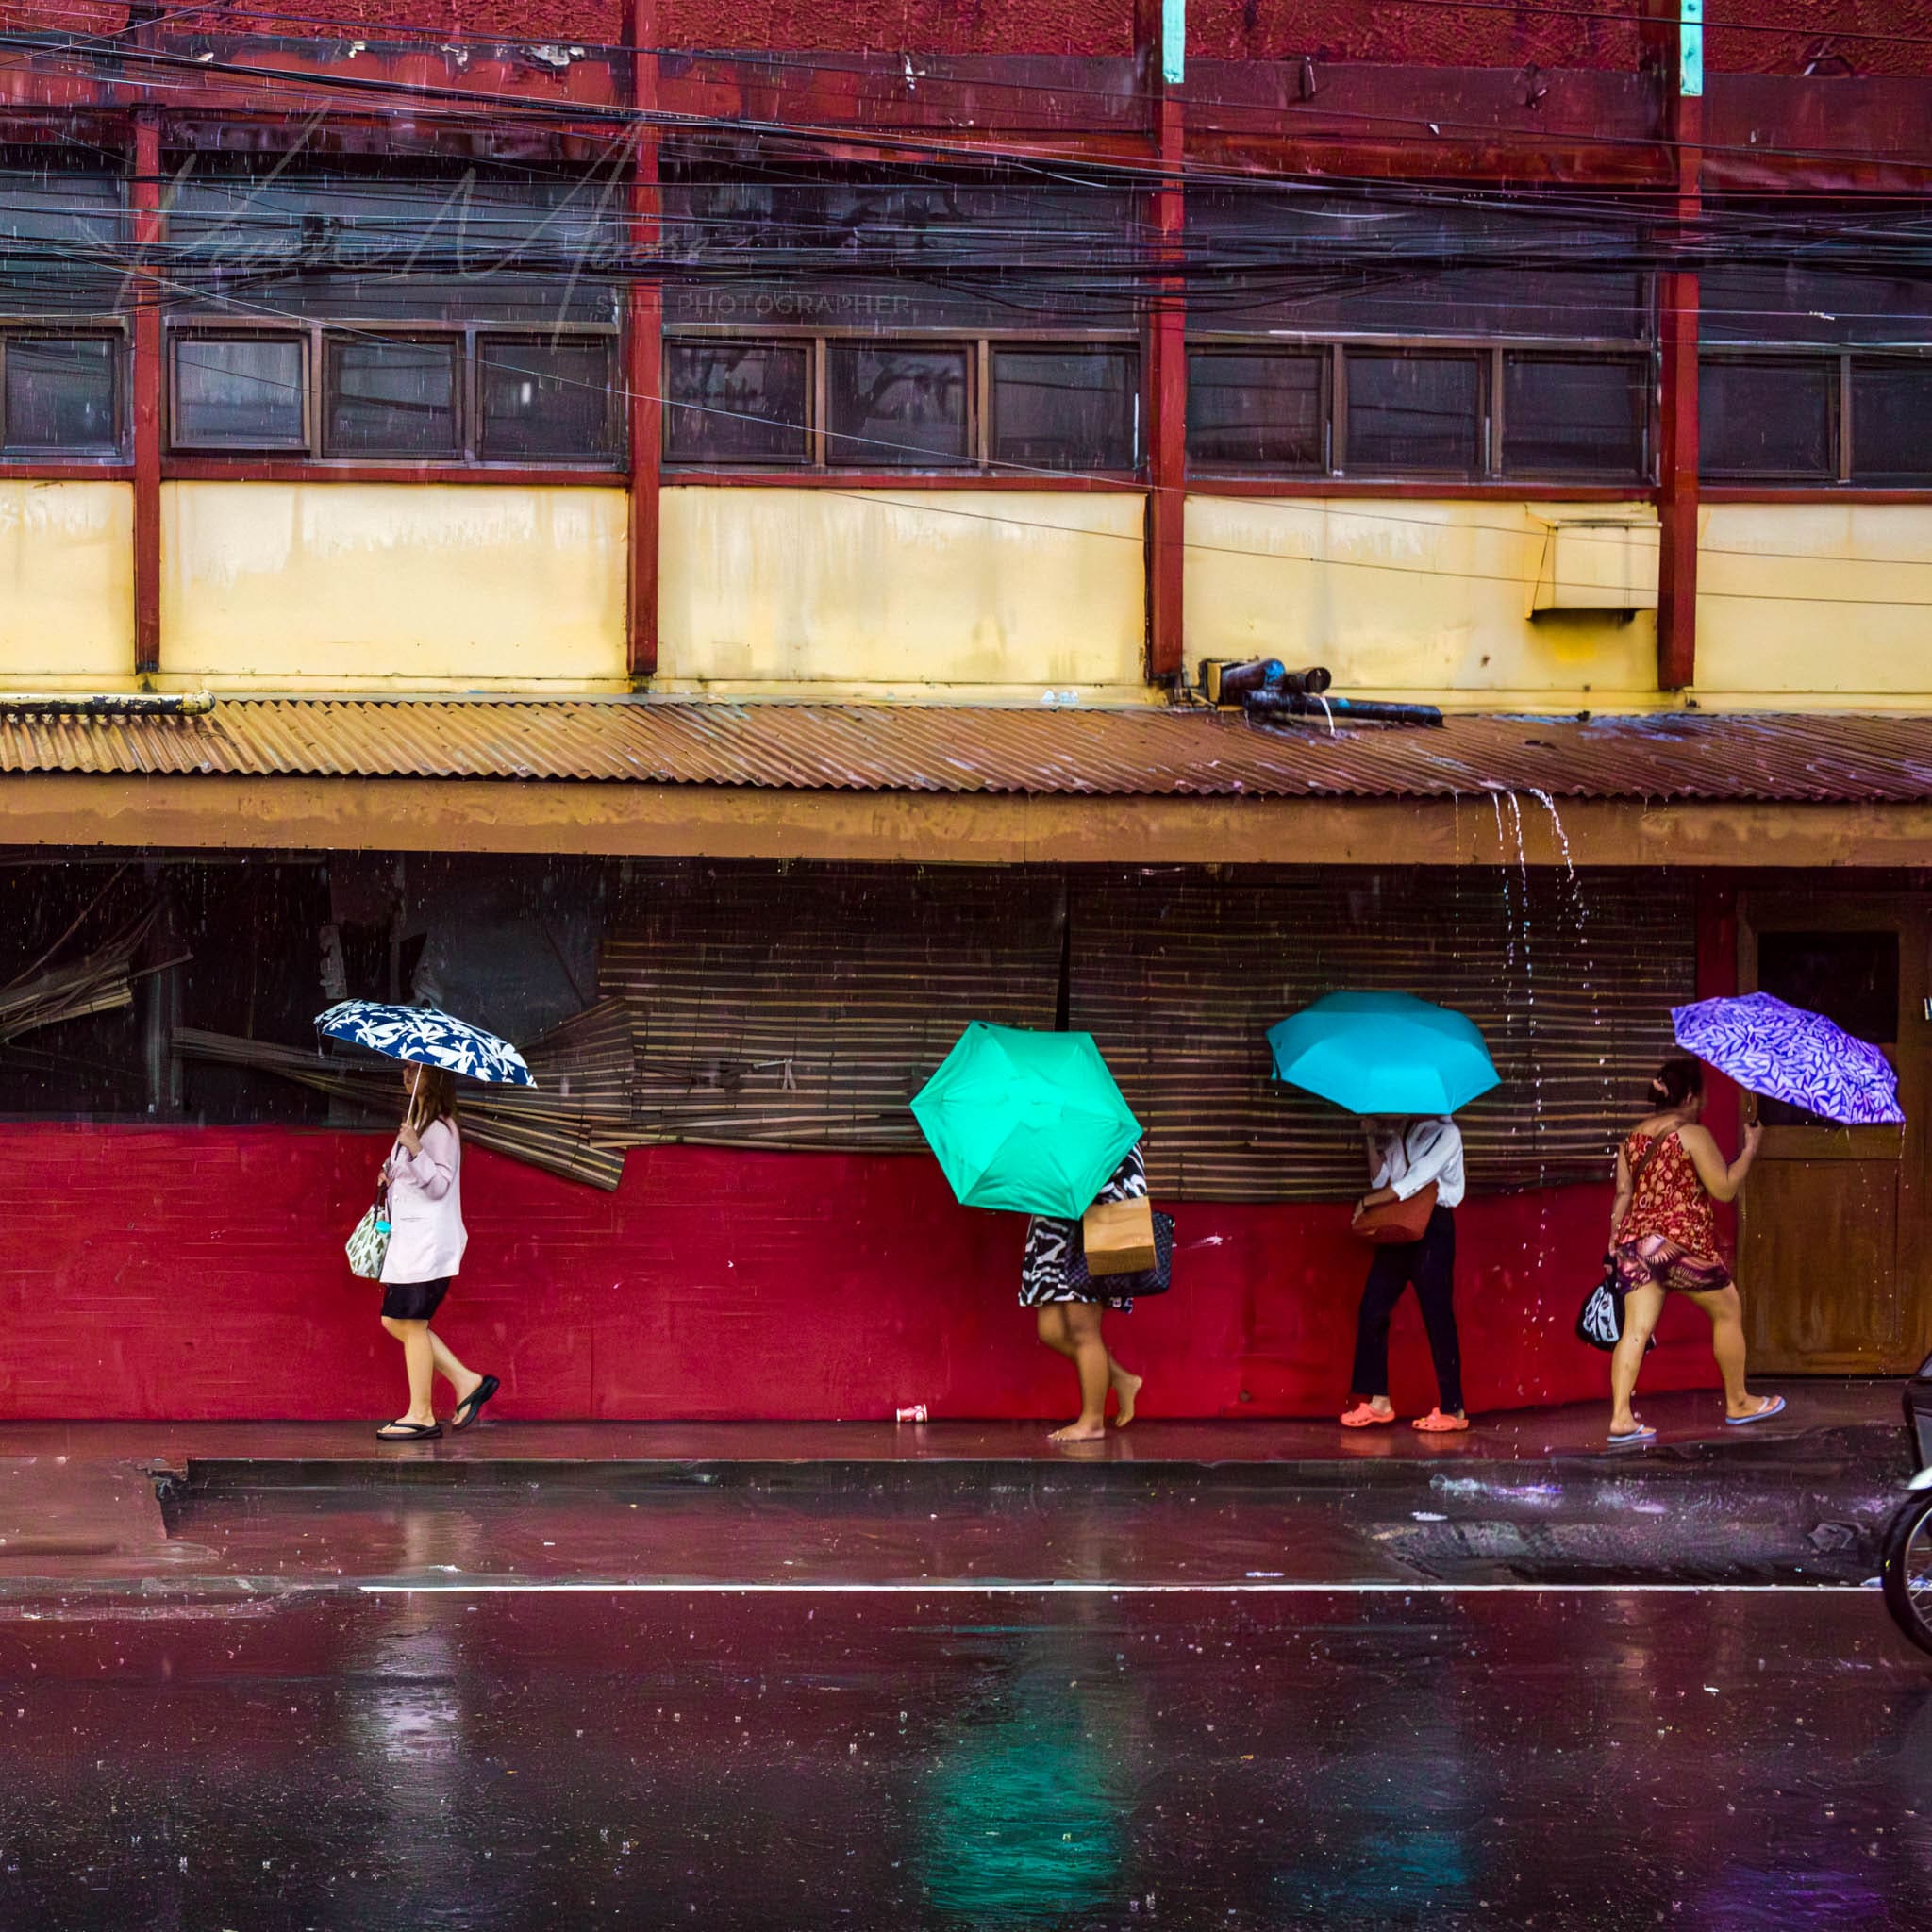 Rainy urban scene with colorful umbrellas and vibrant building facade.